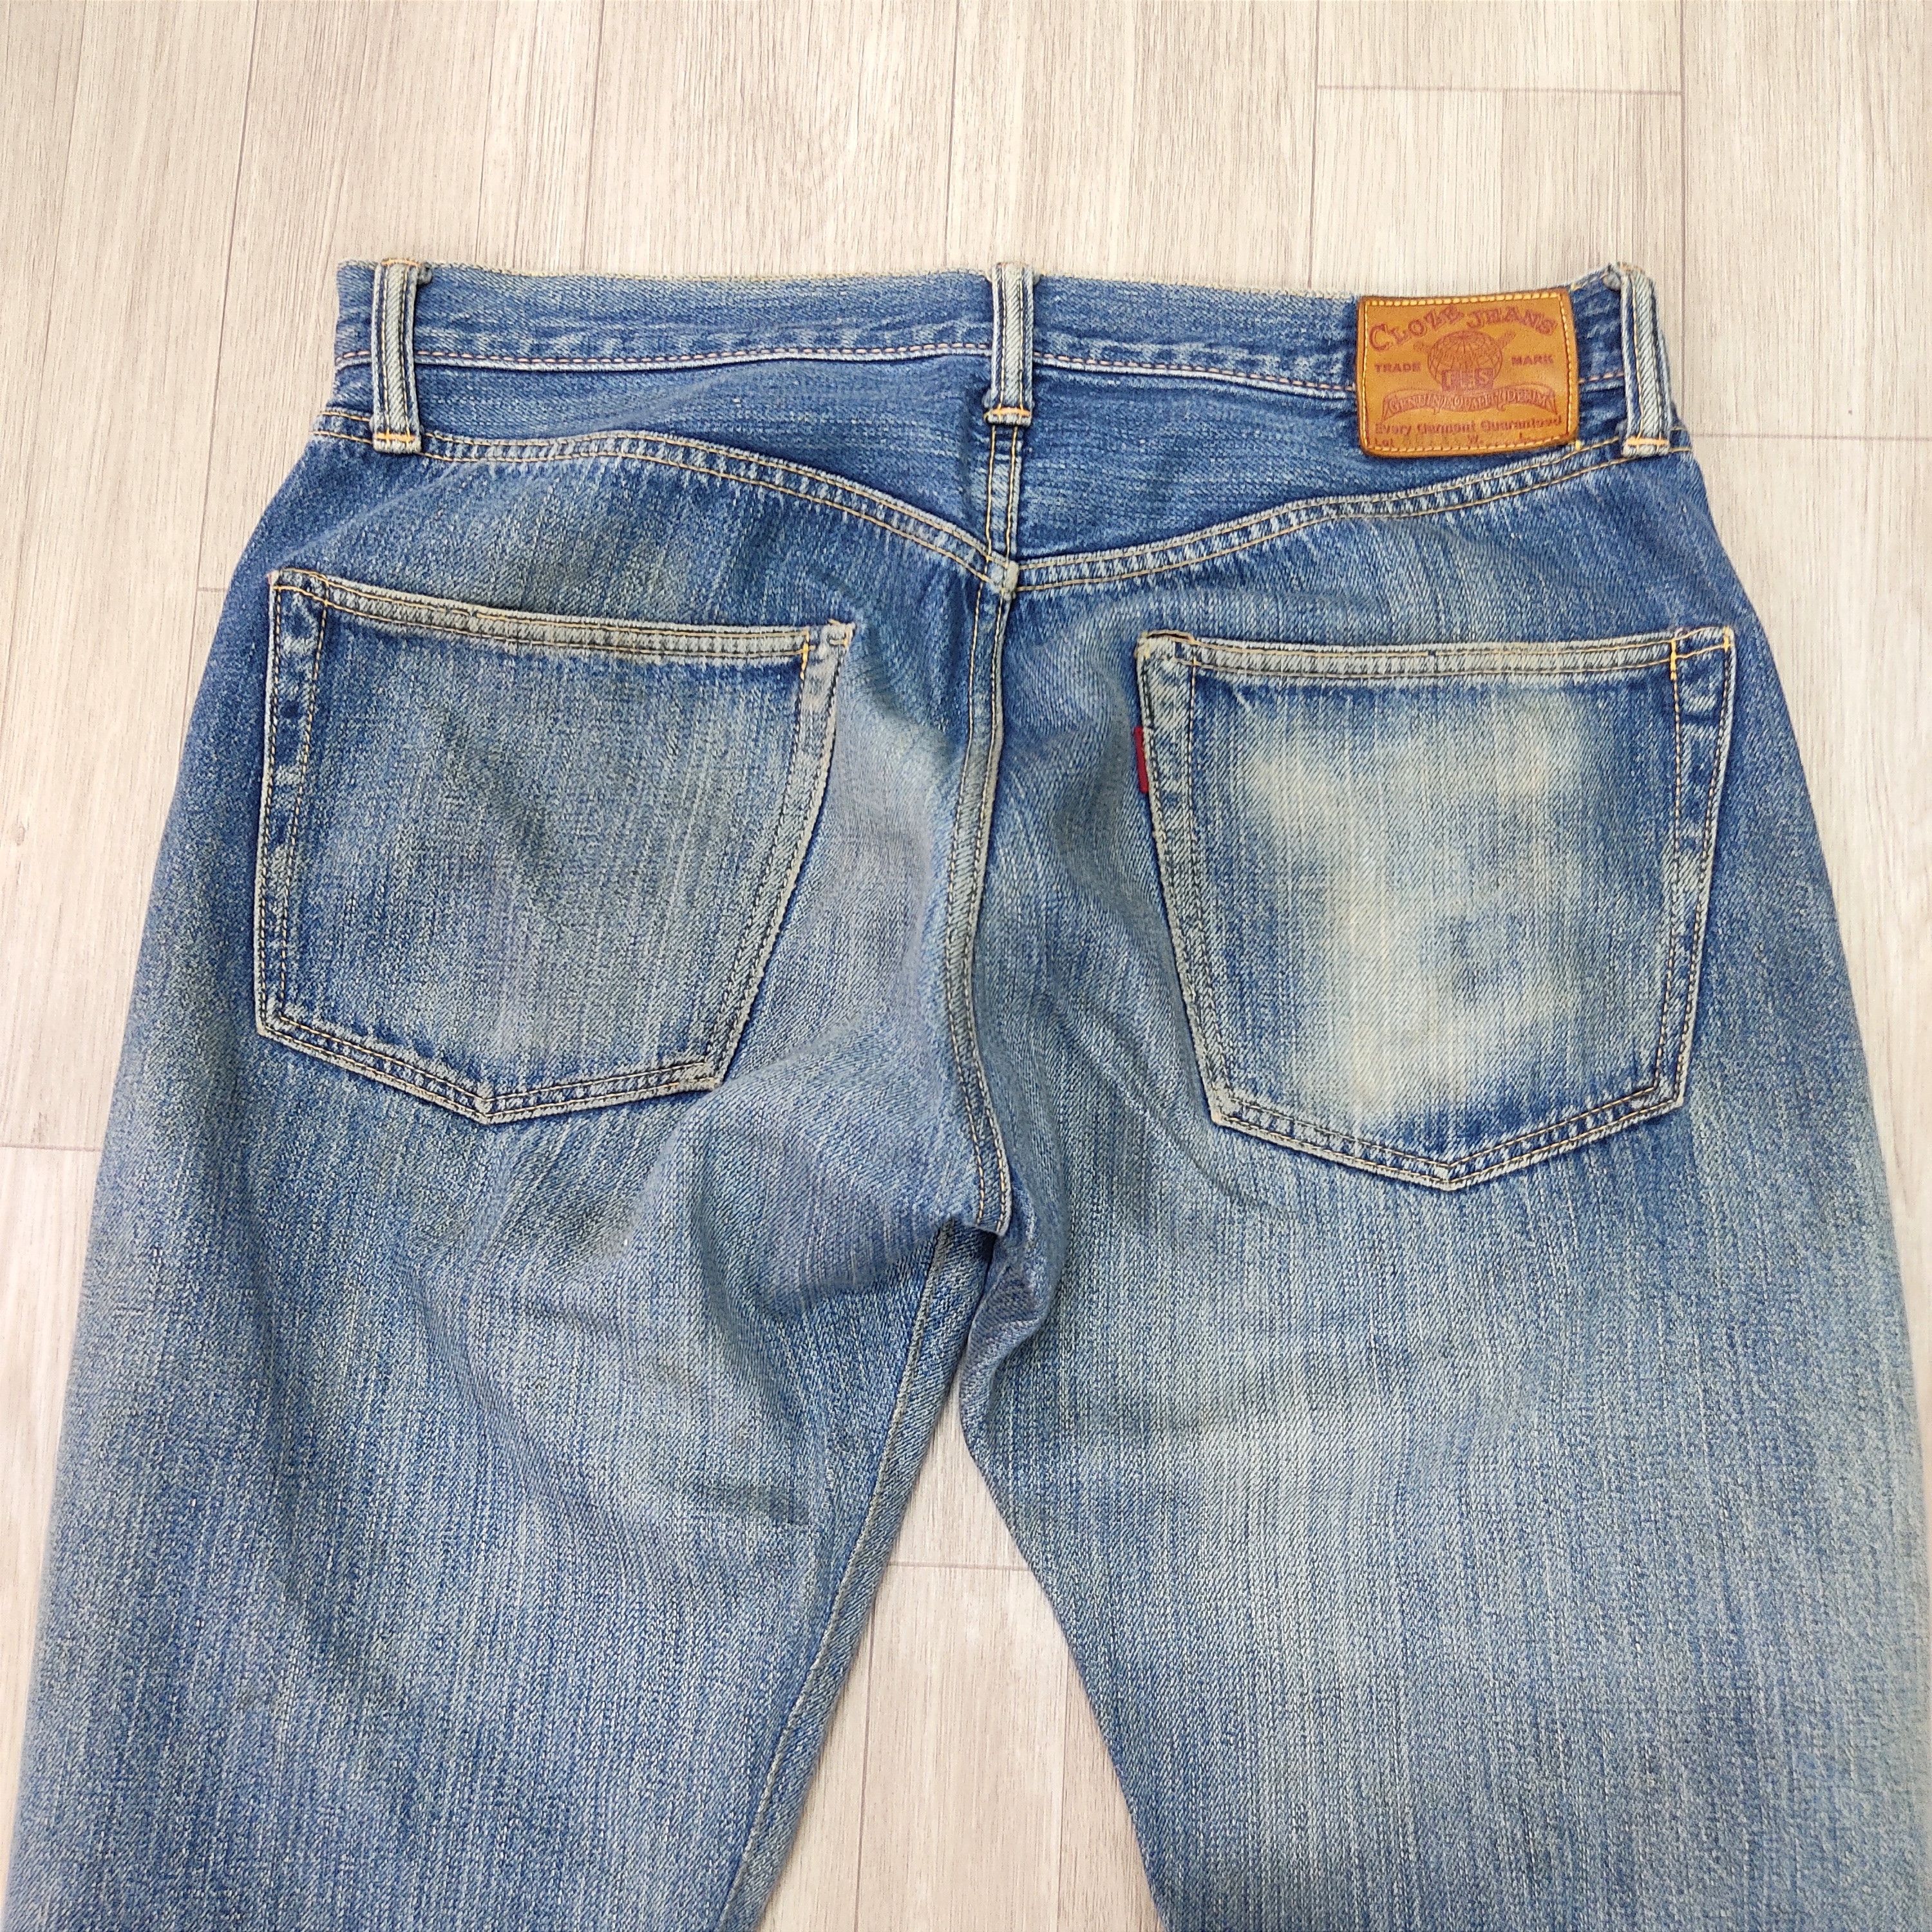 Vintage Cloze Jeans Japanese Selvedge Denim Pants - 10